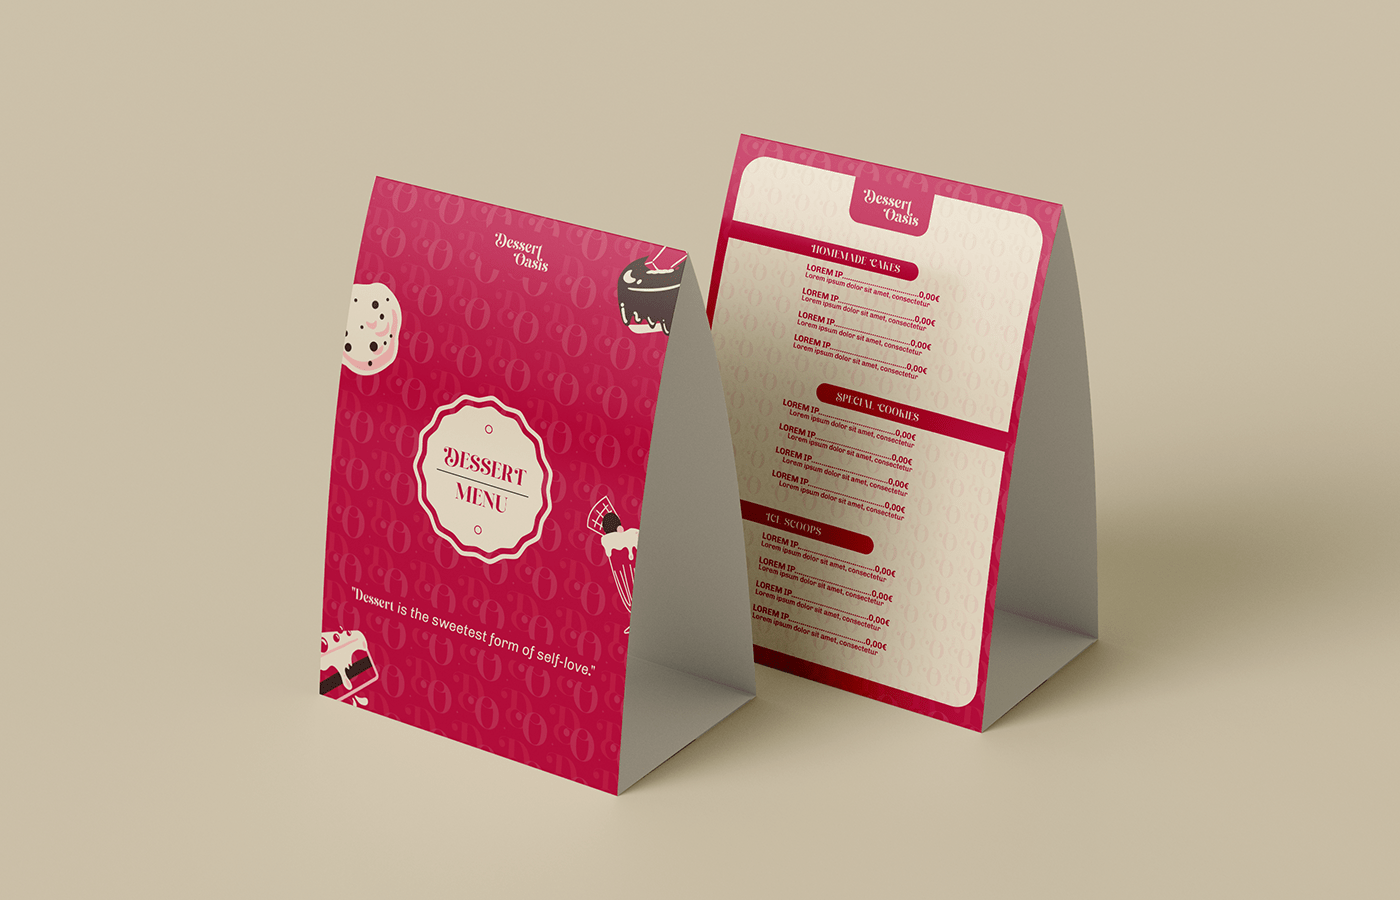 Menu card for the Brand Design for a confectionary and dessert brand.